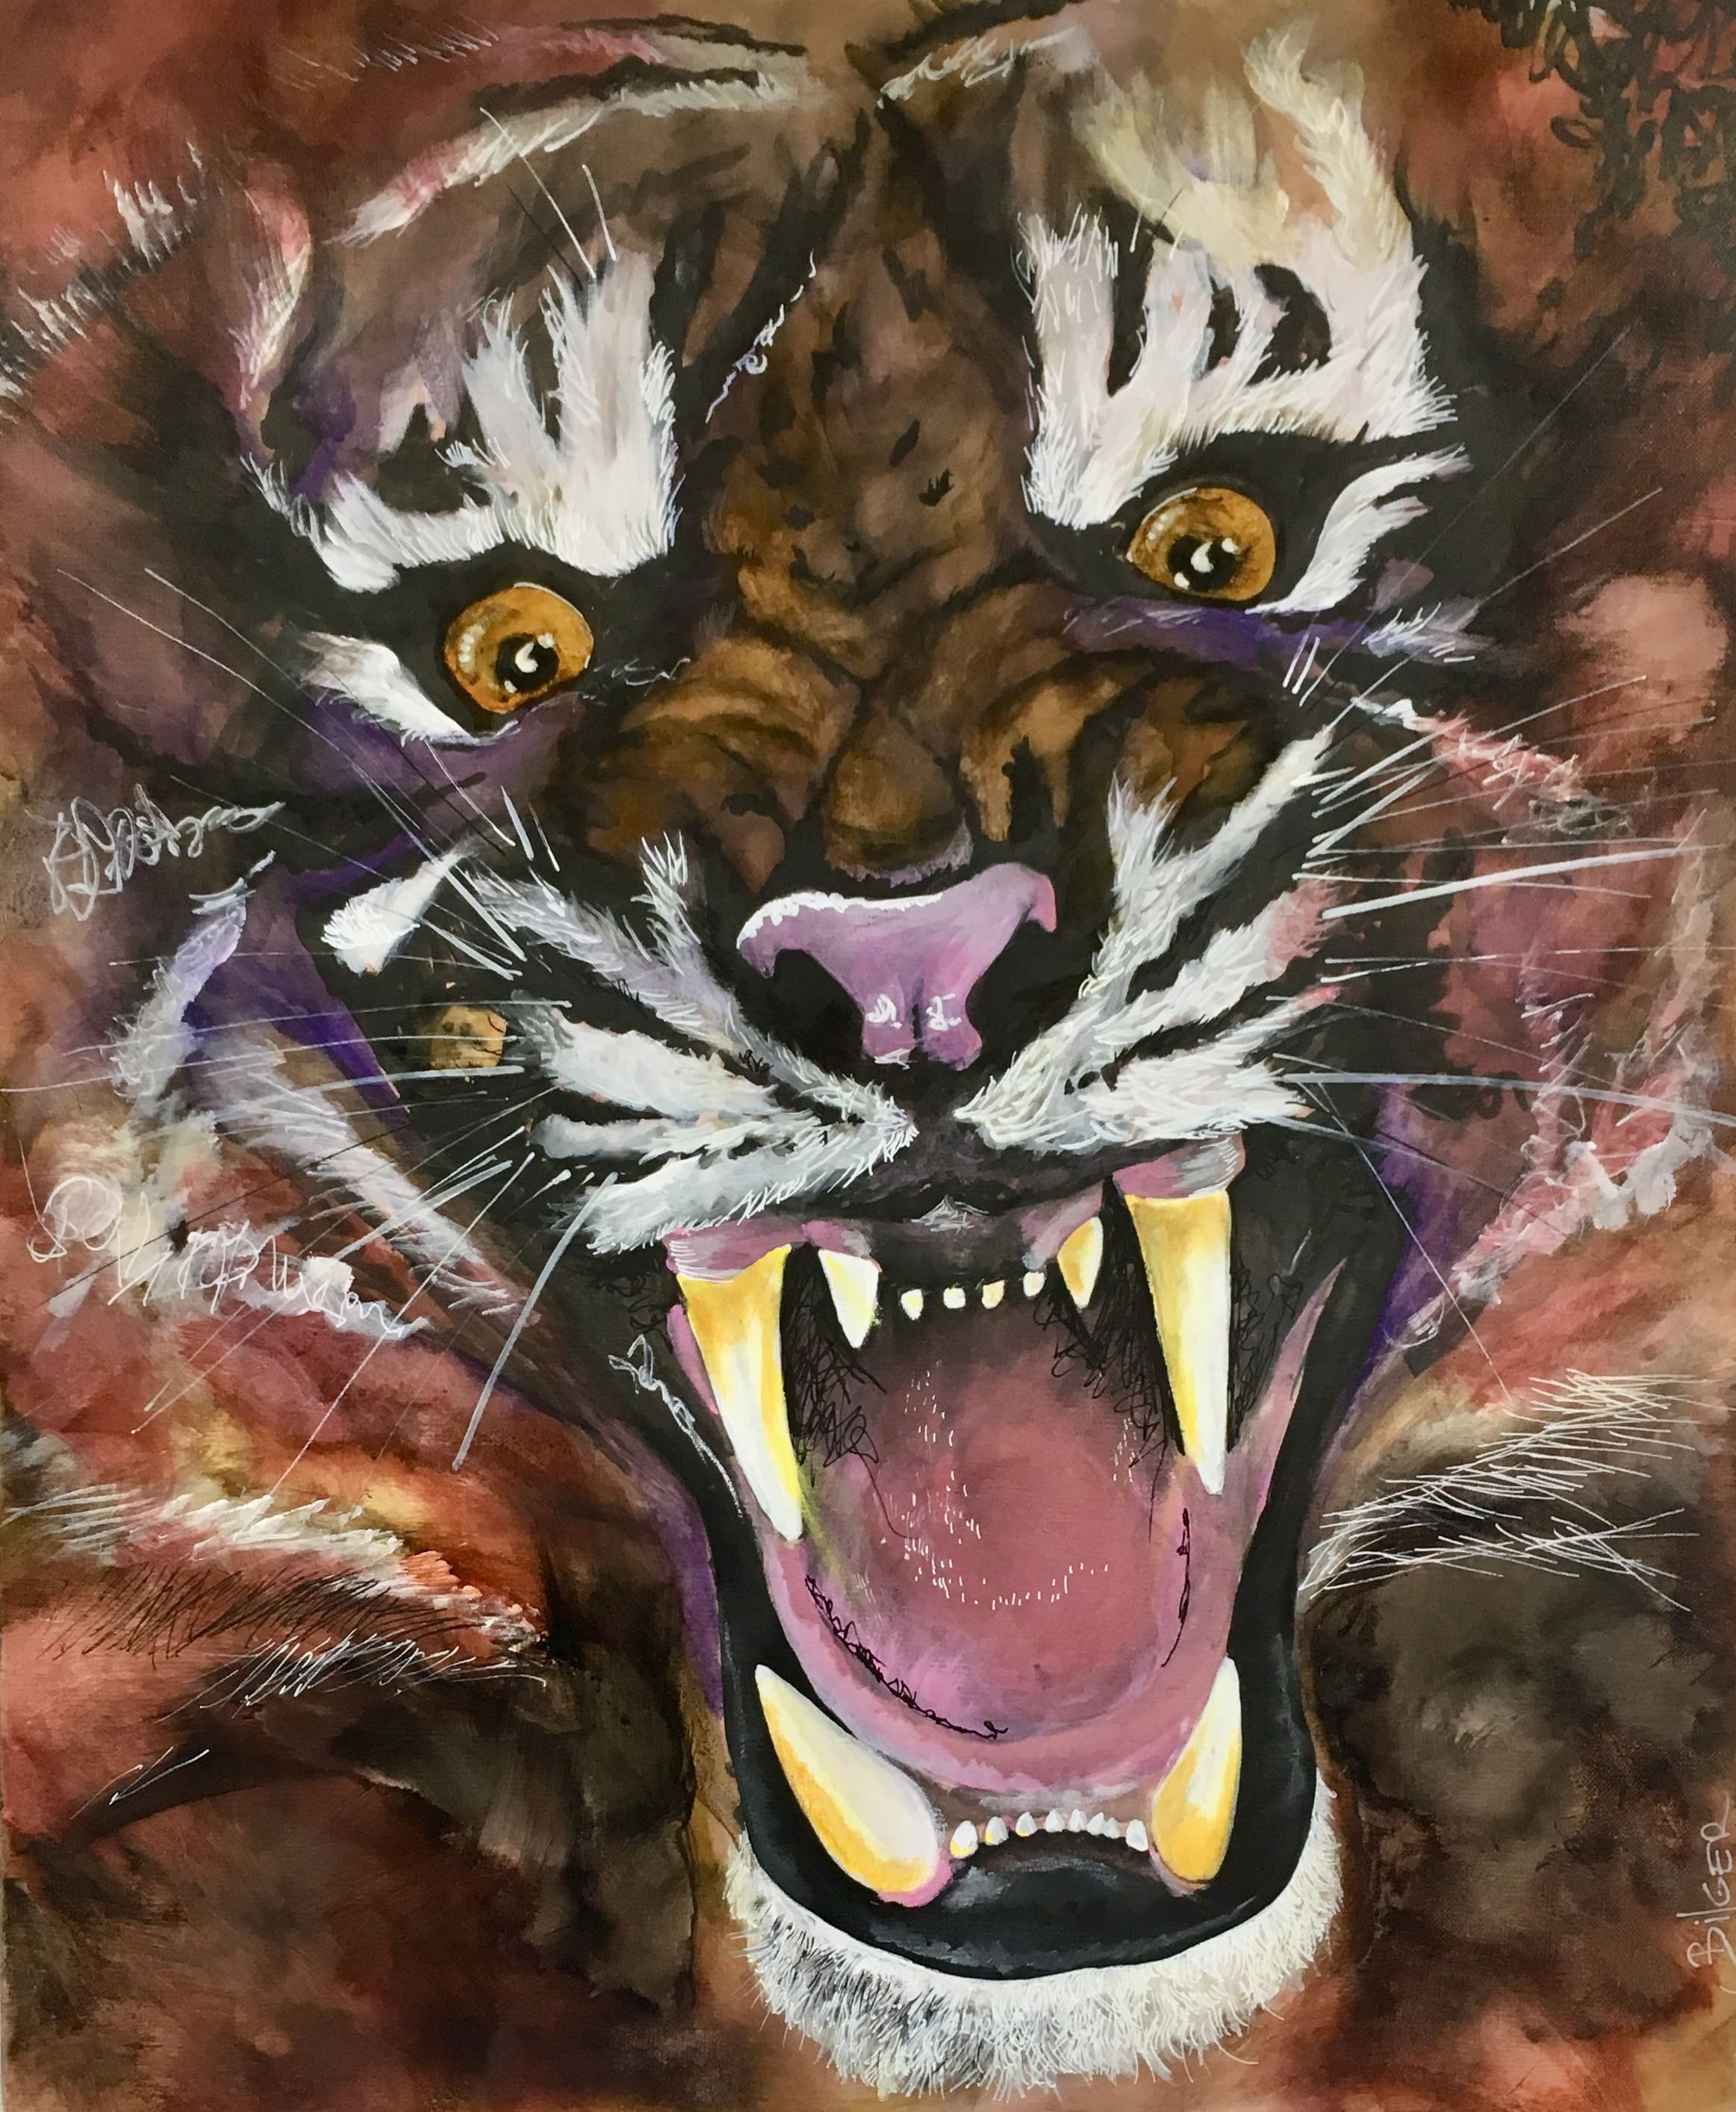 "Tiger", 2019. 1 image